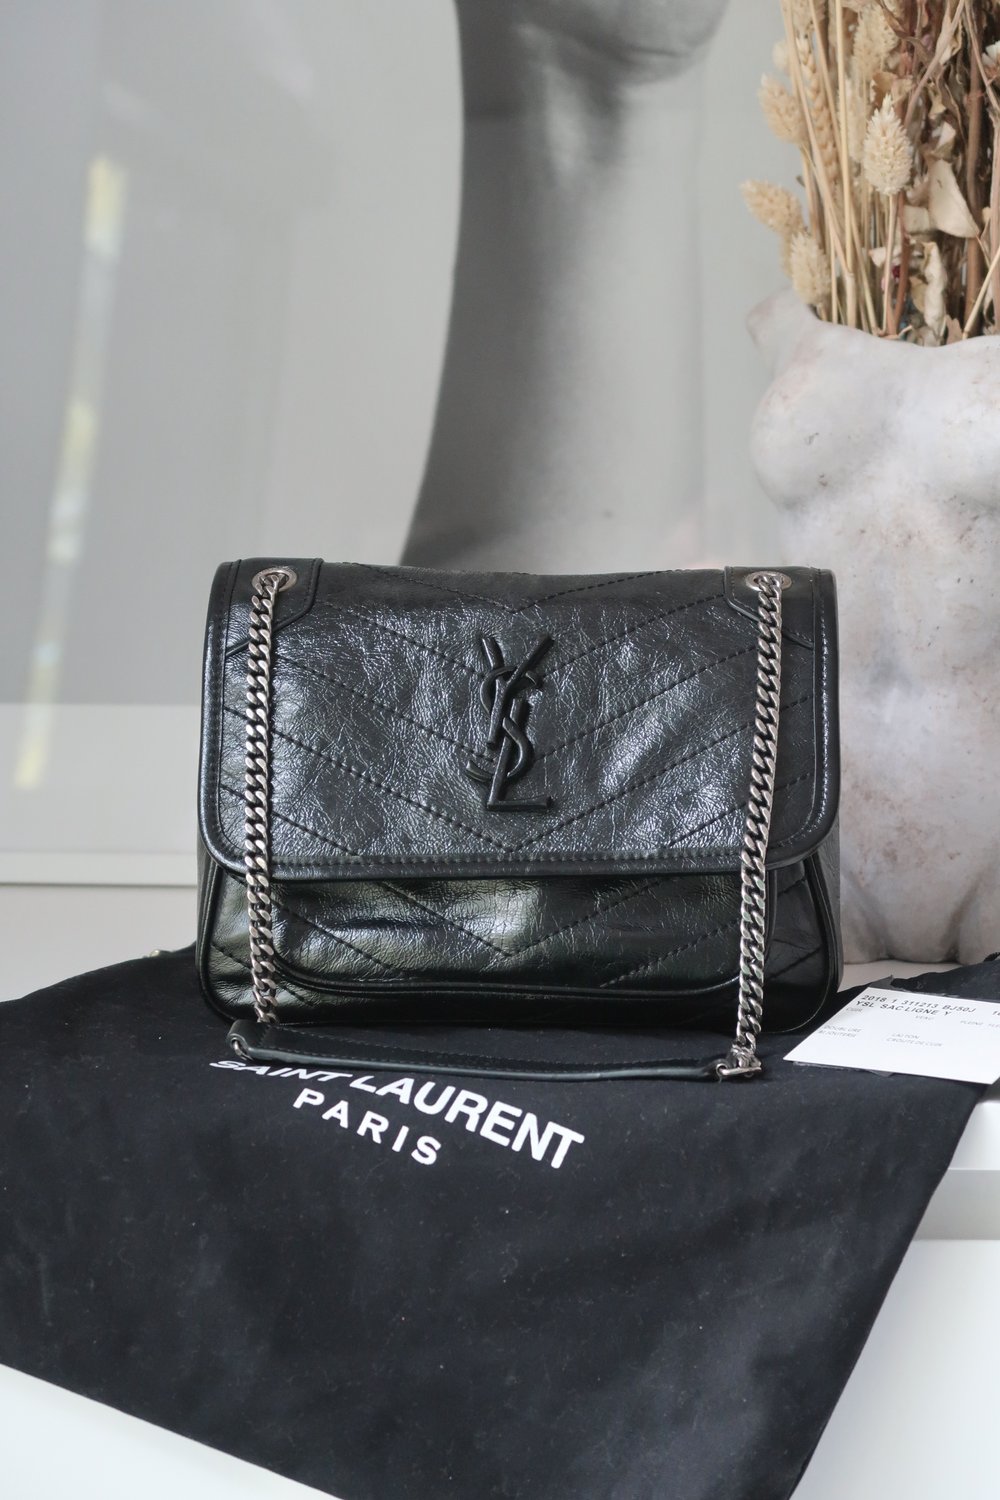 Niki patent leather crossbody bag Saint Laurent Black in Patent